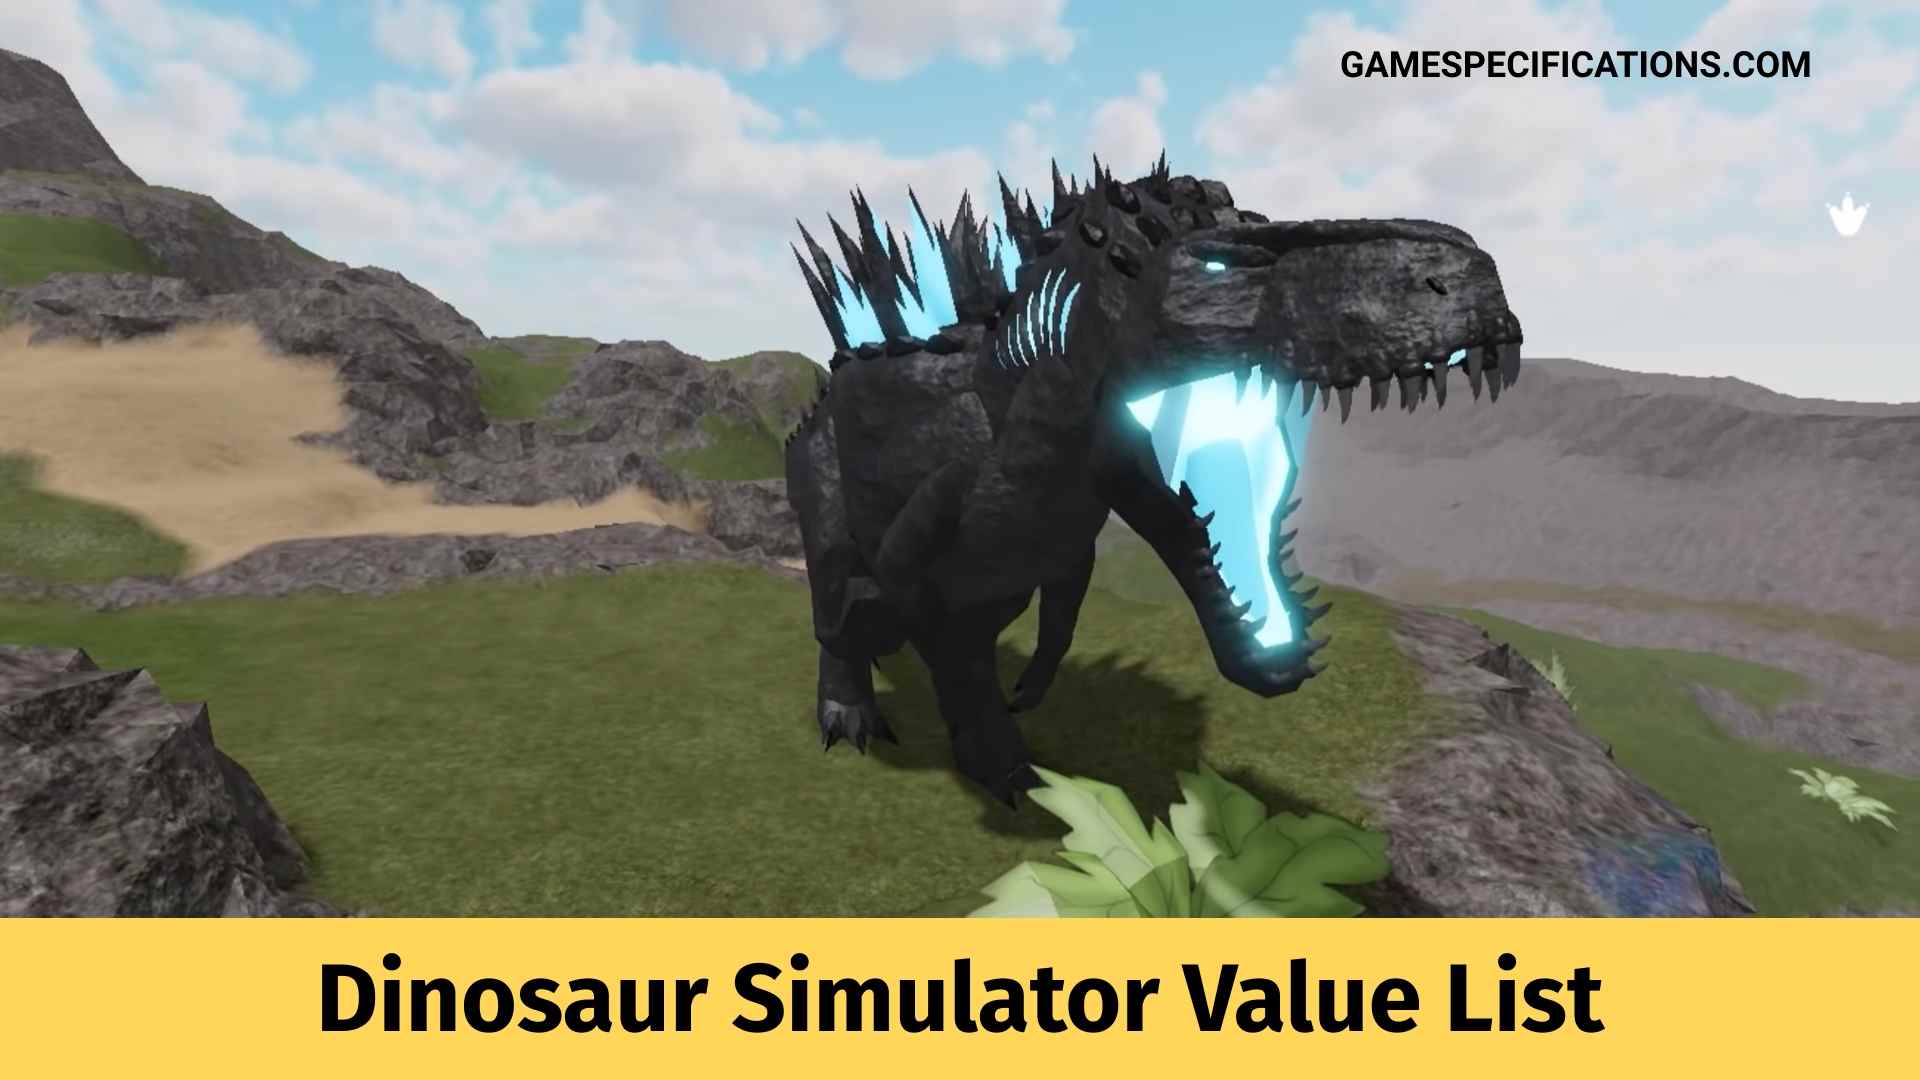 Roblox Dinosaur Simulator Value List For All Tiers 2021 Game Specifications - roblox dinosaur simulator megavore code